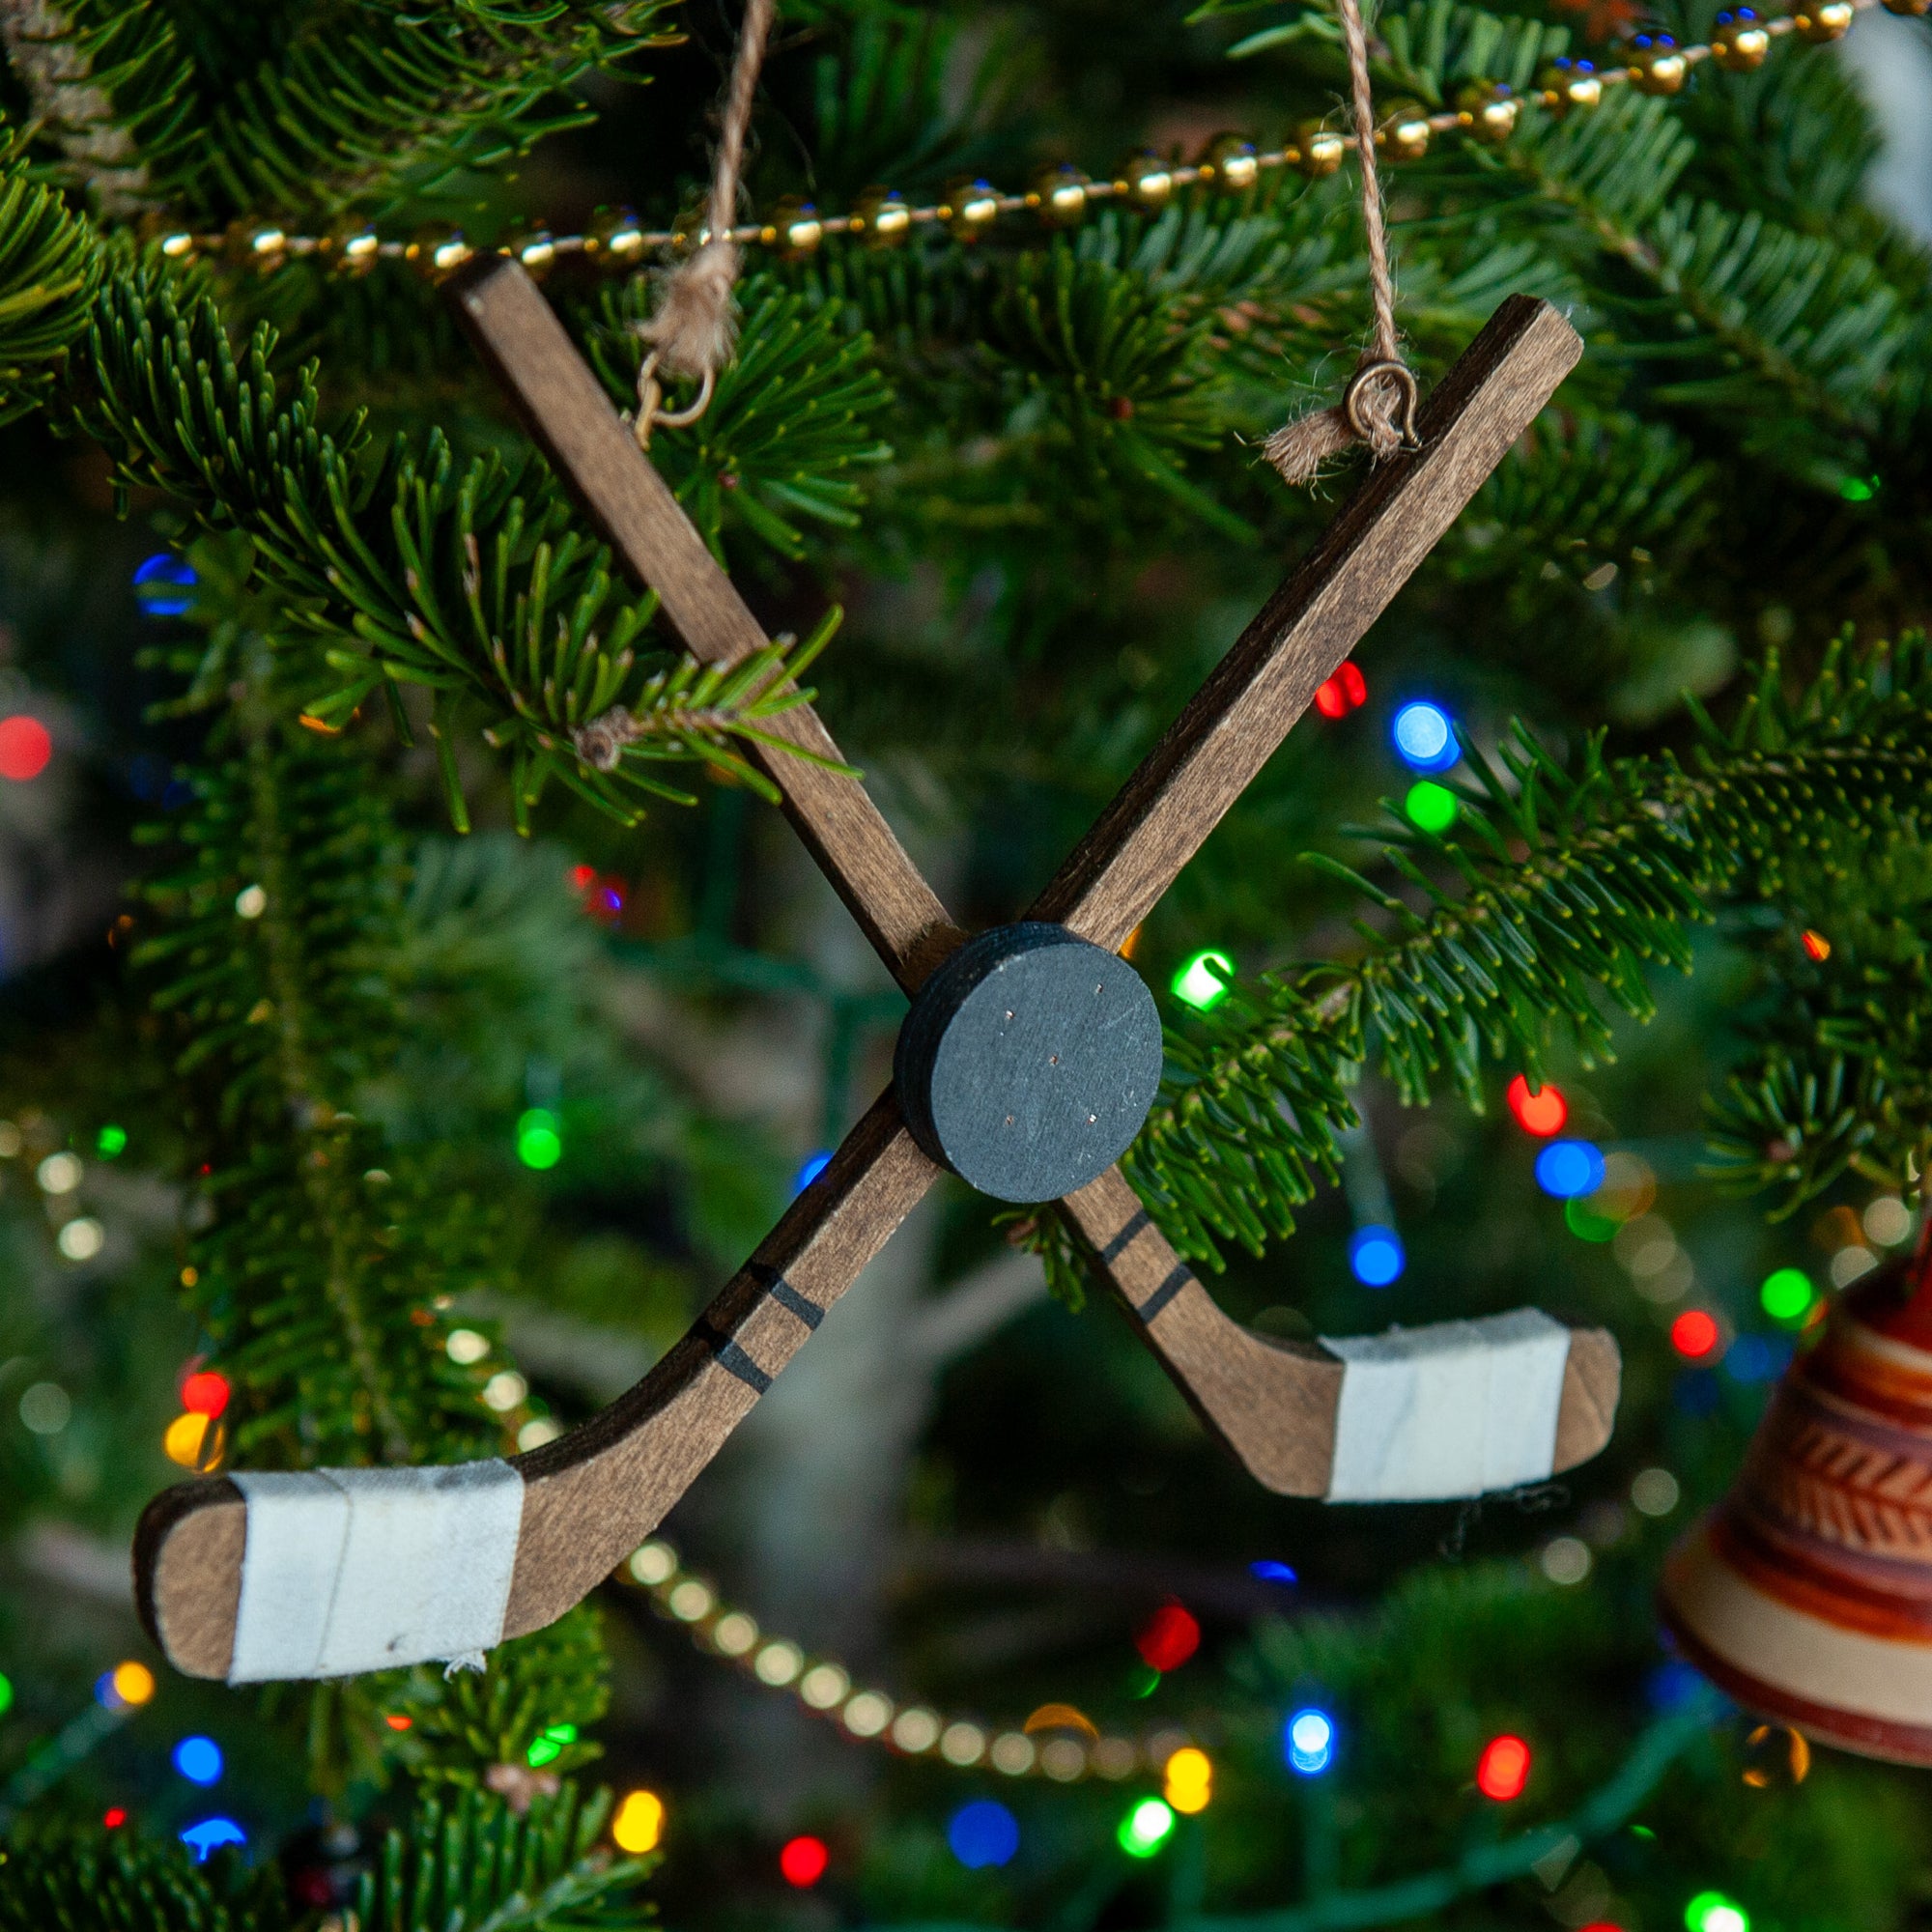 Crossed Hockey Stick & Puck Ornament